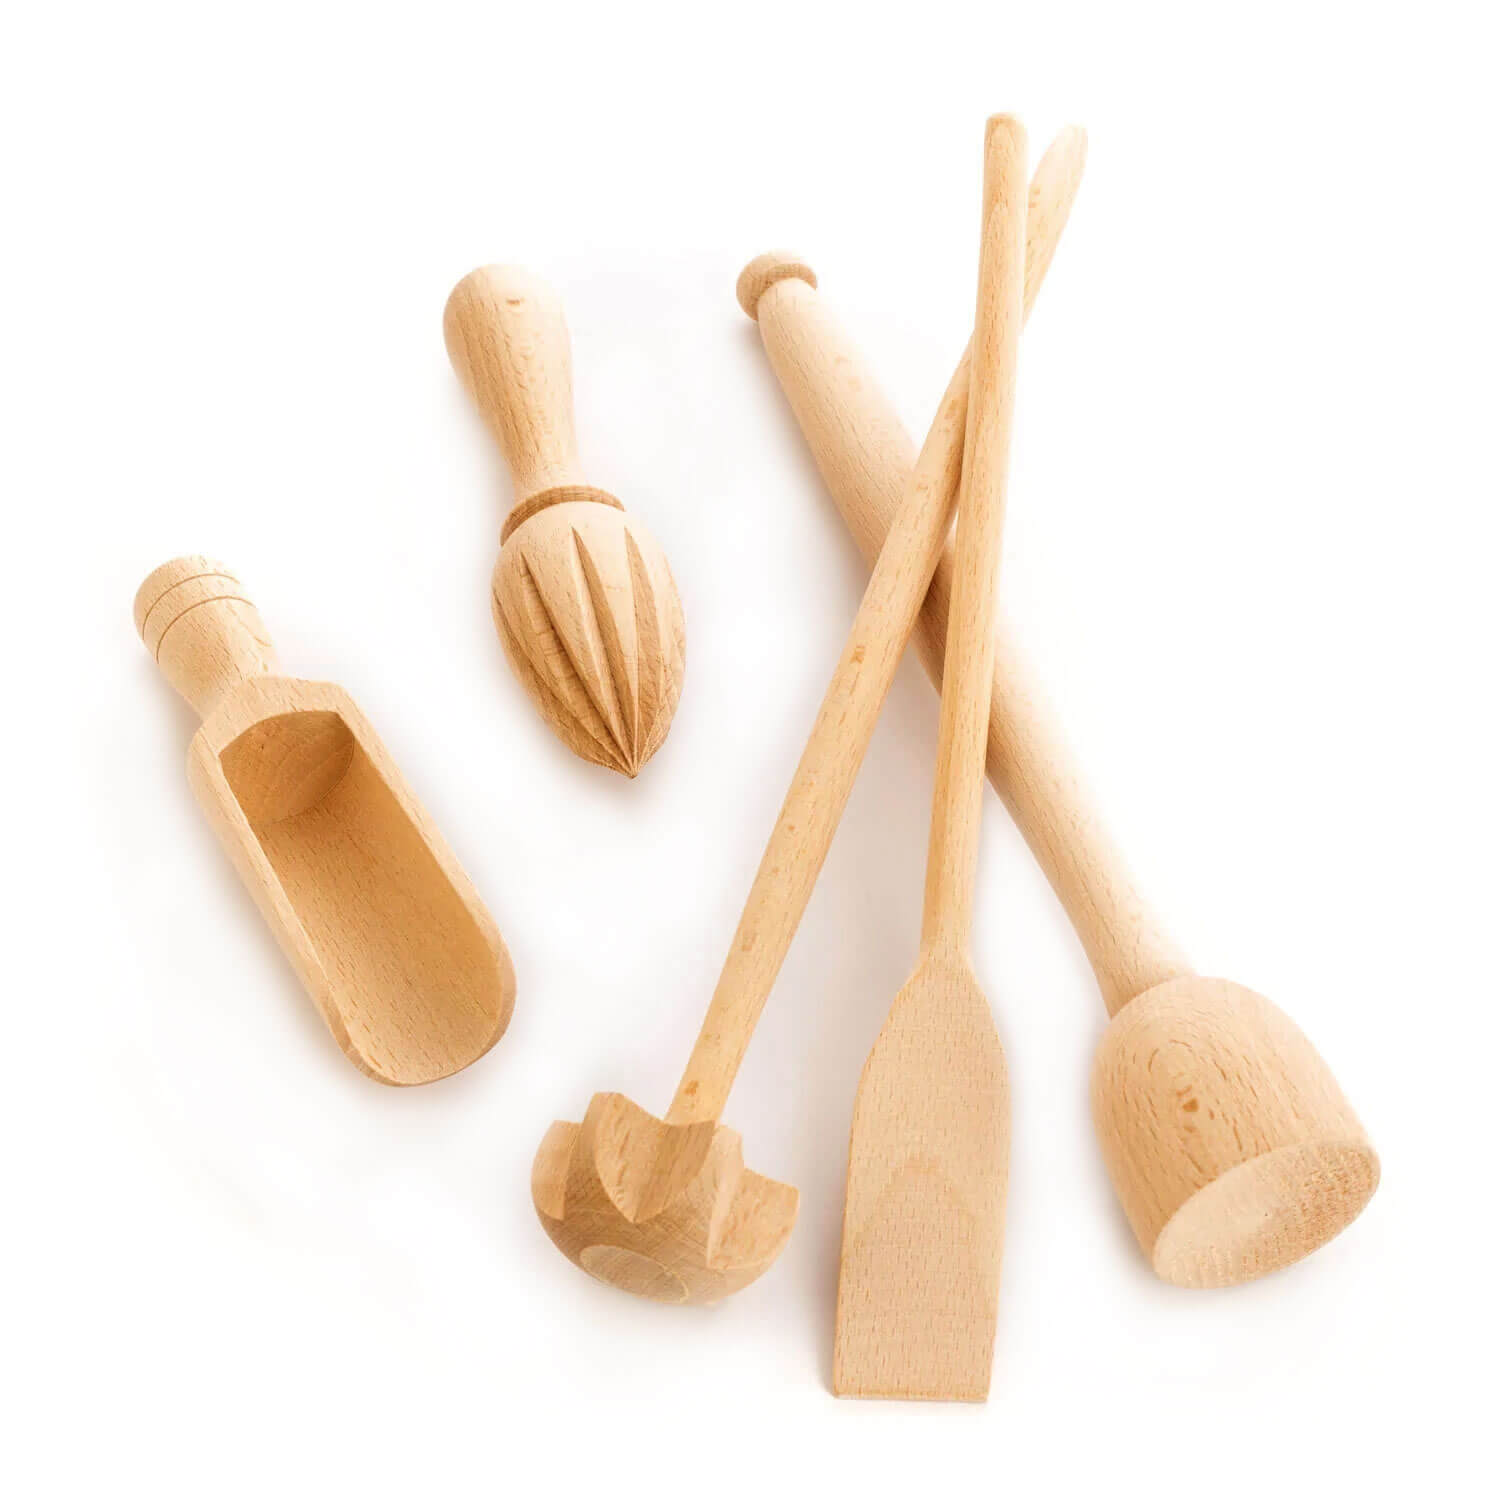 https://cdn.shopify.com/s/files/1/0515/2440/3381/products/5-piece-wooden-kitchen-utensils-set-tuuli-790.jpg